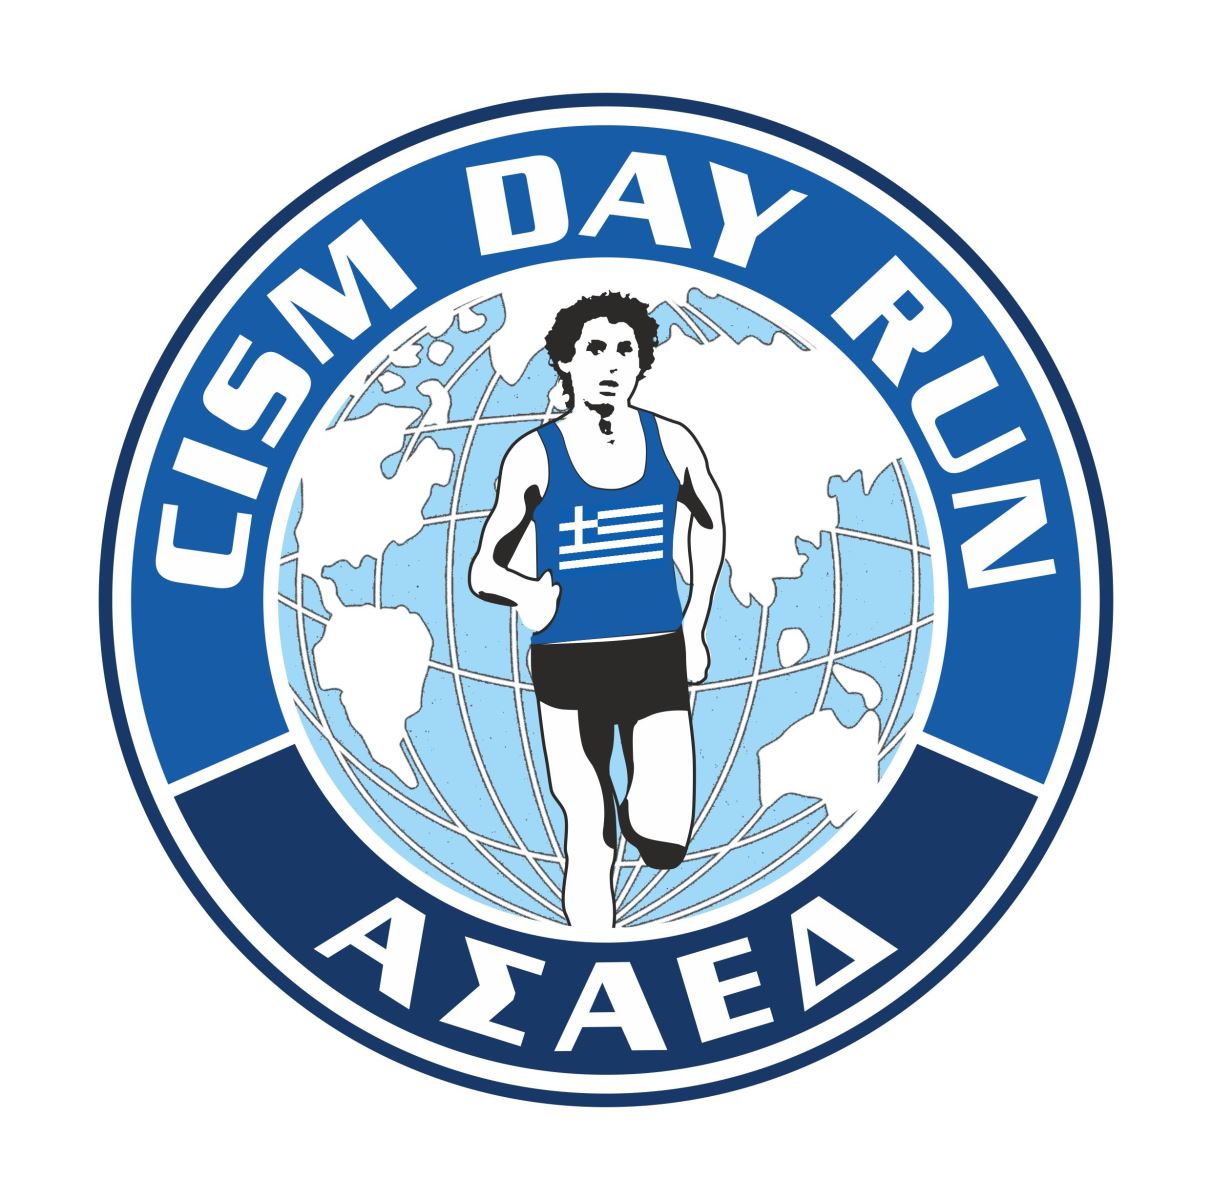 Cism Day Run 2020 - 5km